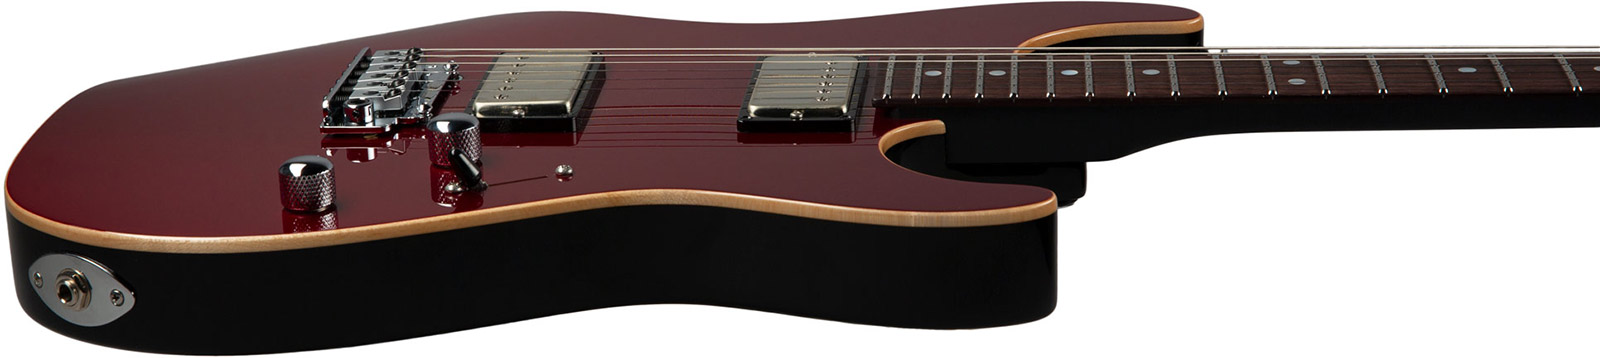 Suhr Pete Thorn Standard 01-sig-0029 Signature 2h Trem Rw - Garnet Red - Guitarra eléctrica con forma de str. - Variation 2